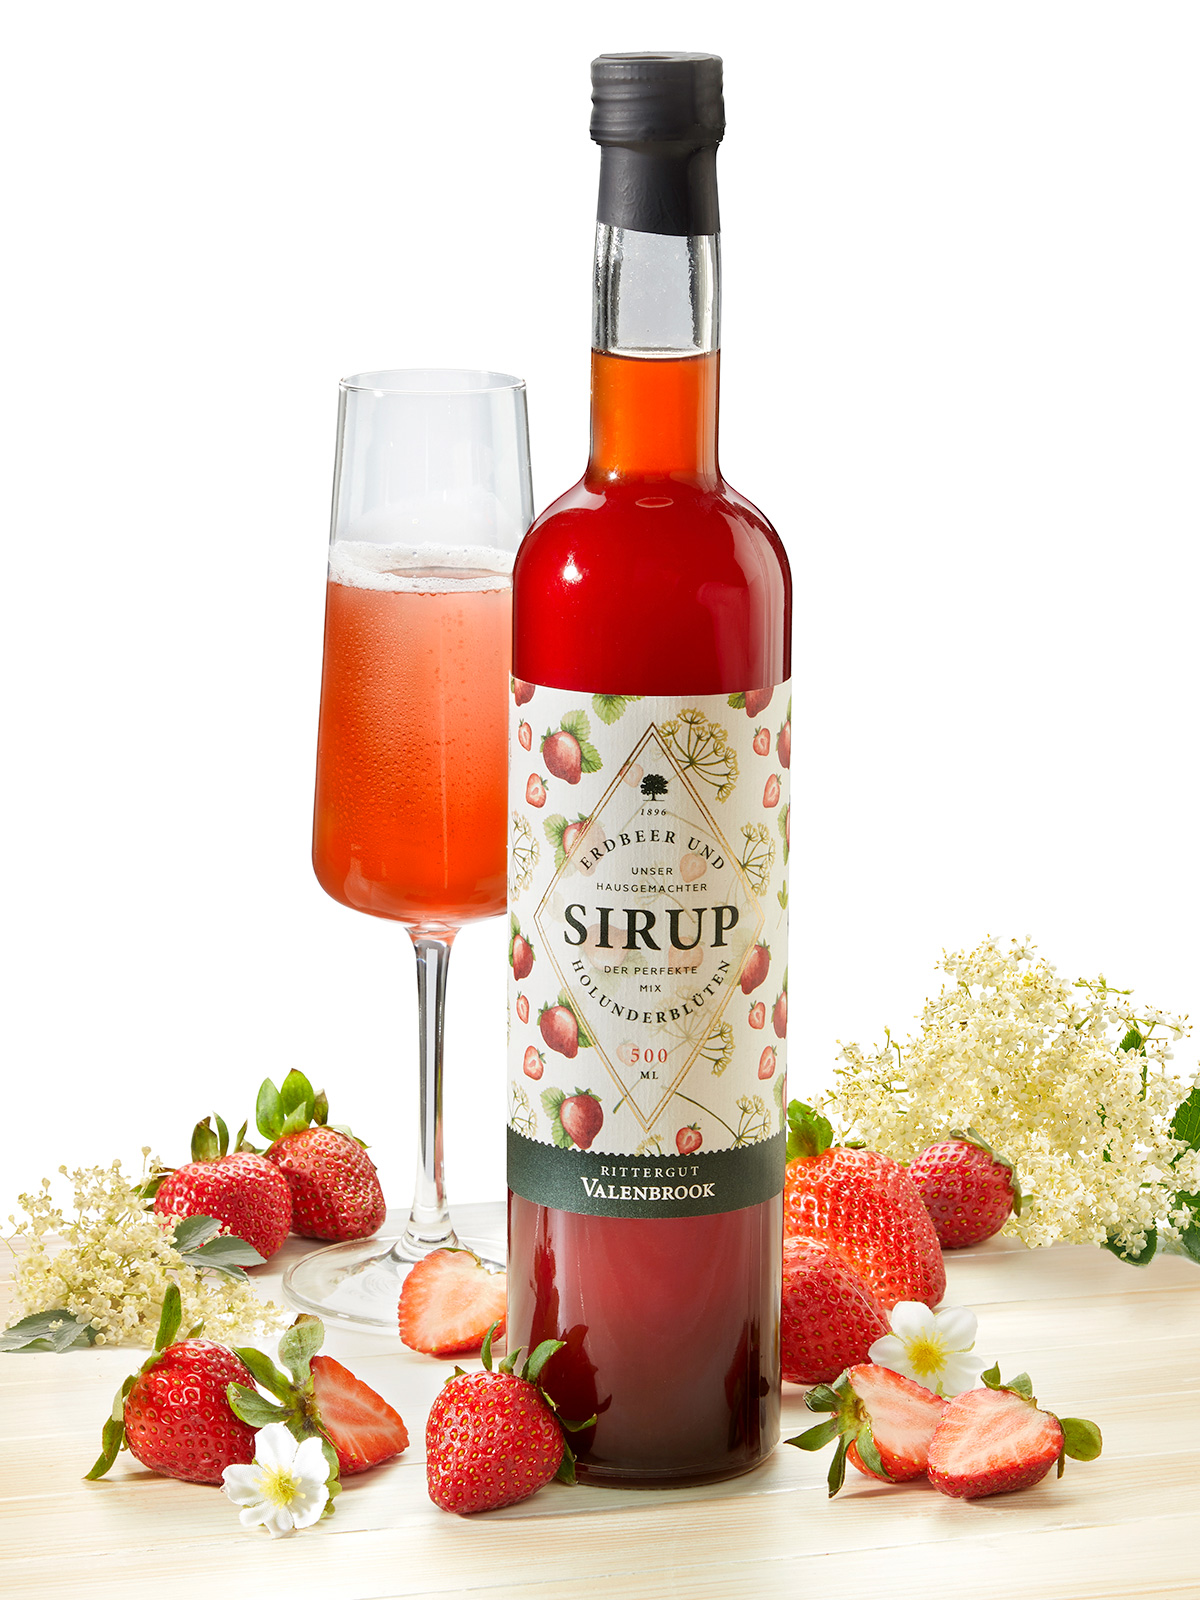 Erdbeer-Holunderblüten-Sirup